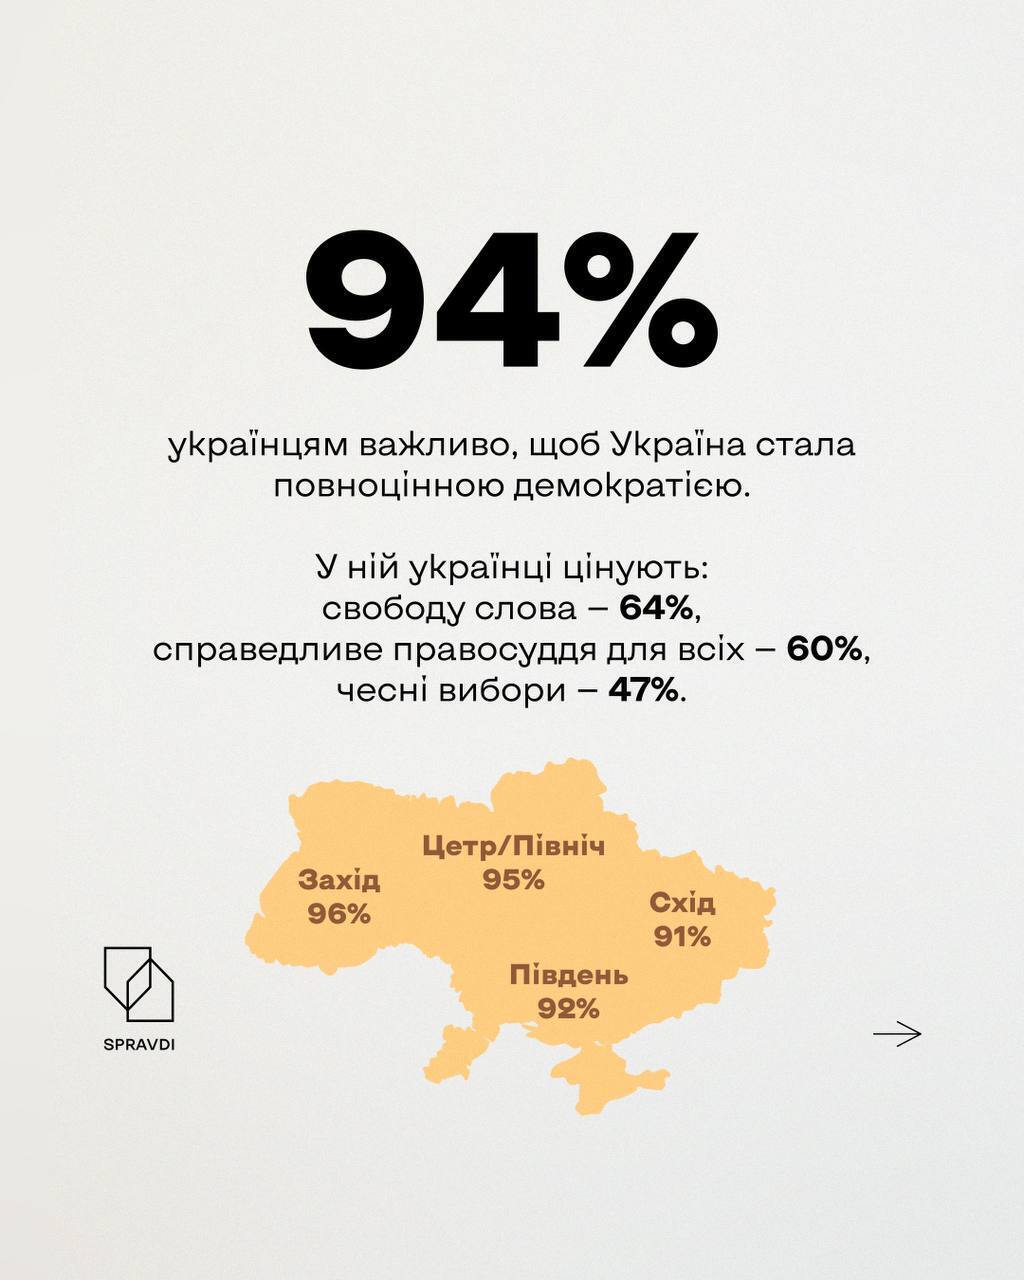 Для 94% украинцев важна полноценная демократия